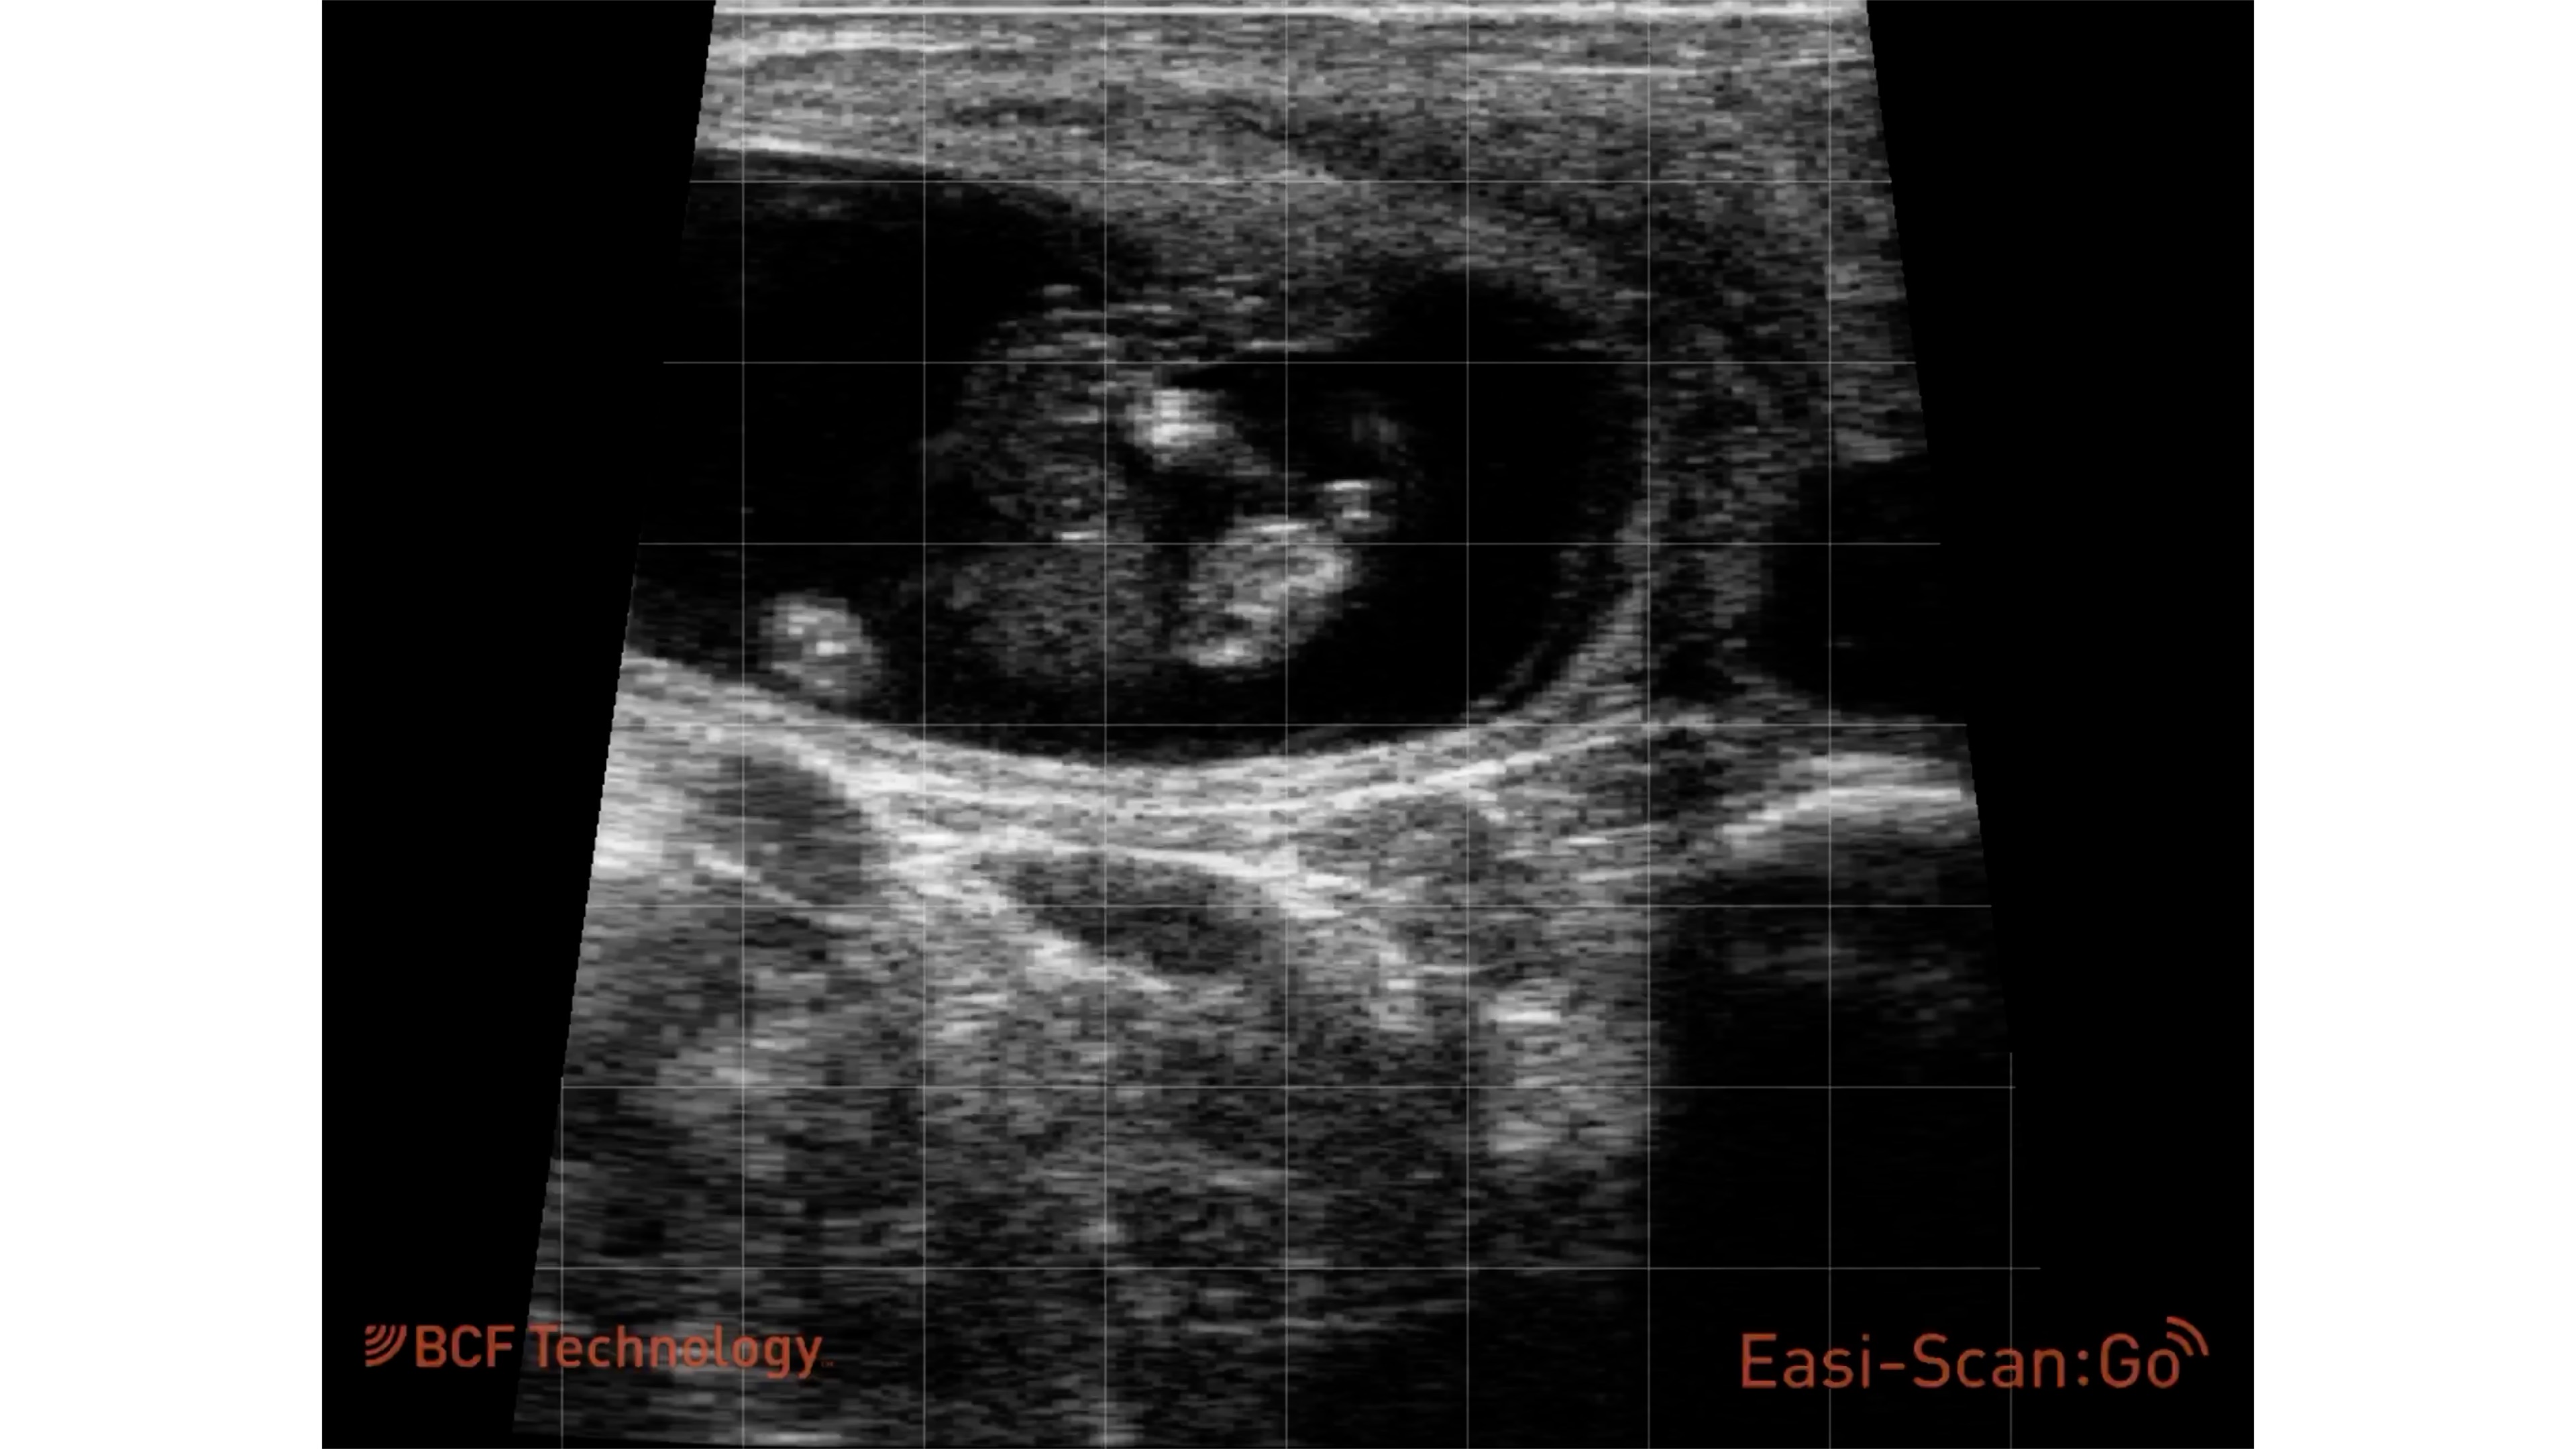 65 day female calf fetus